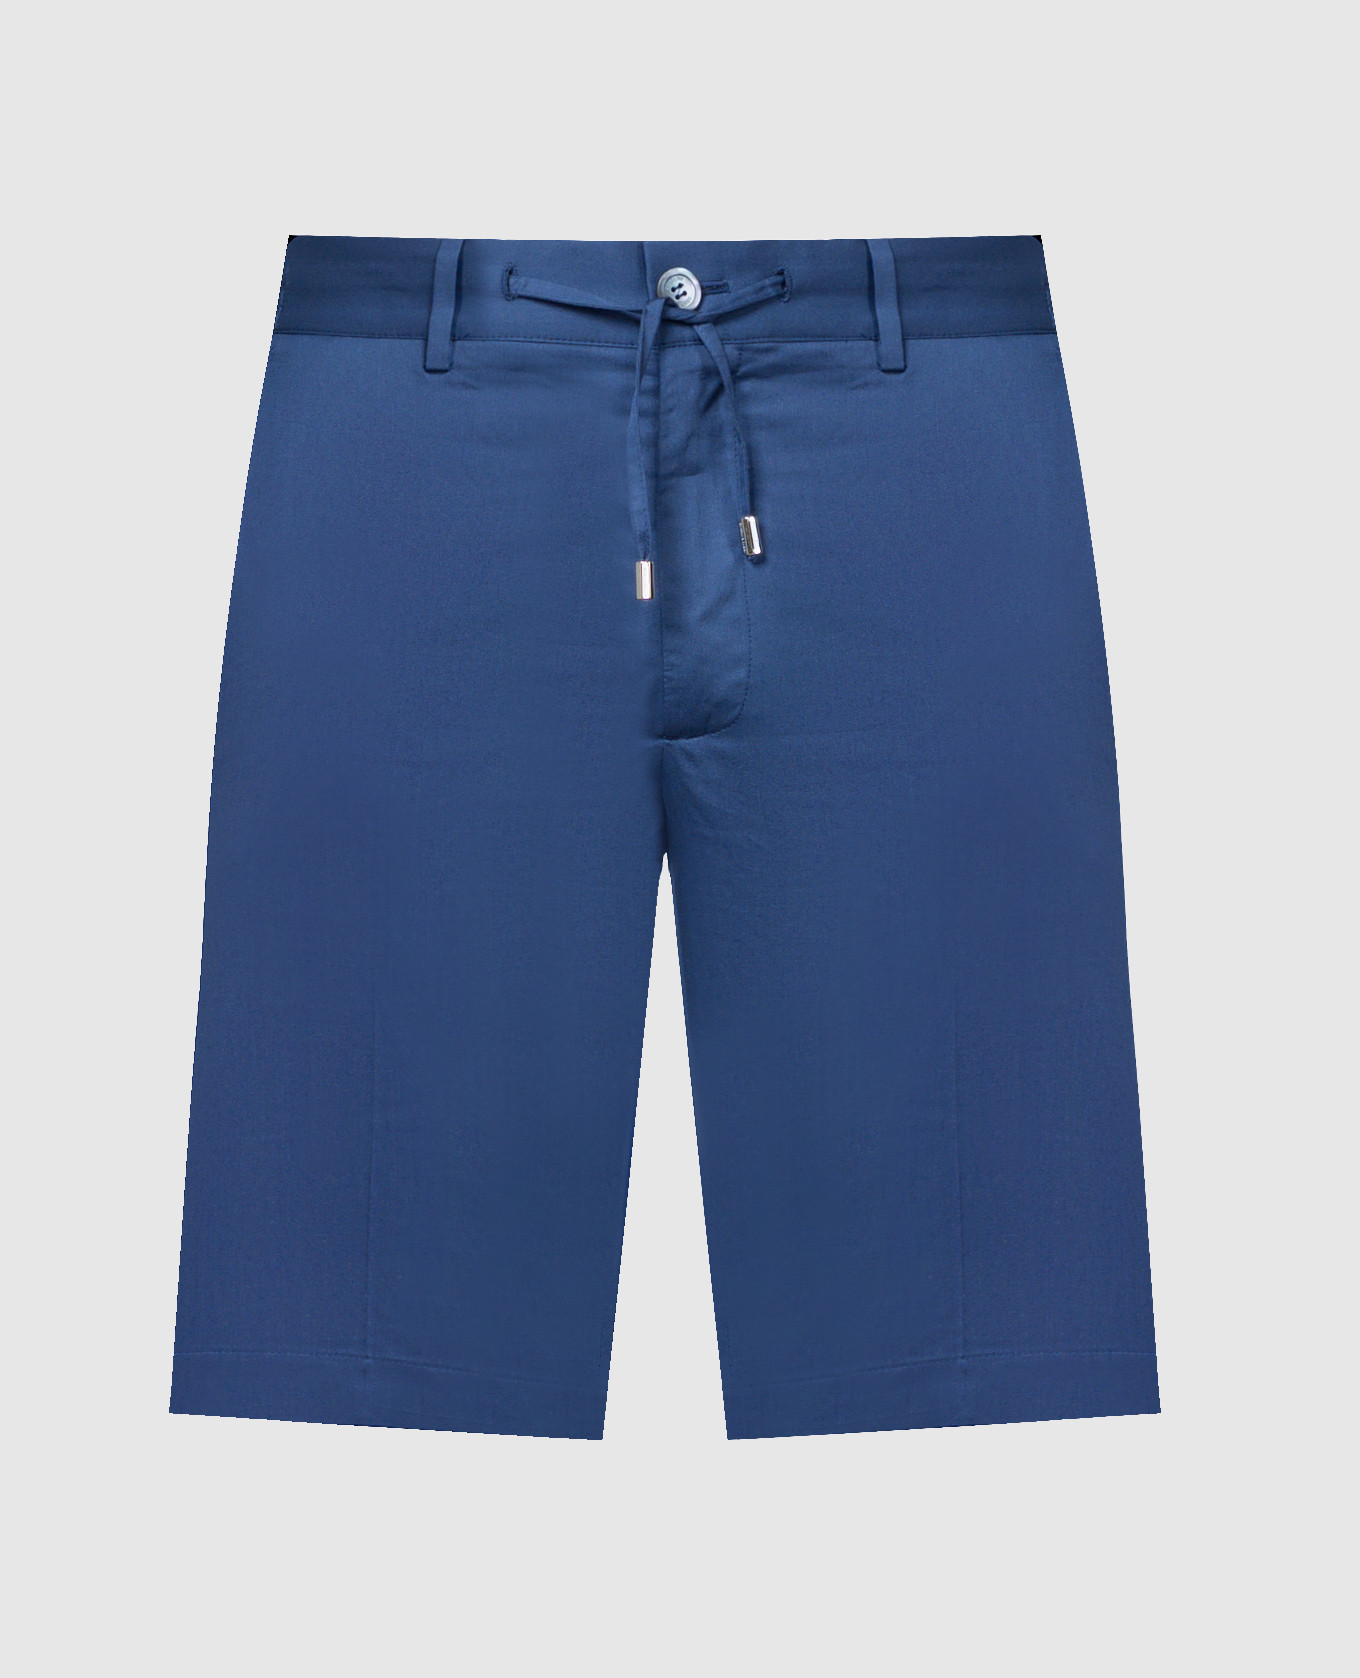 Blue shorts with metallic logo